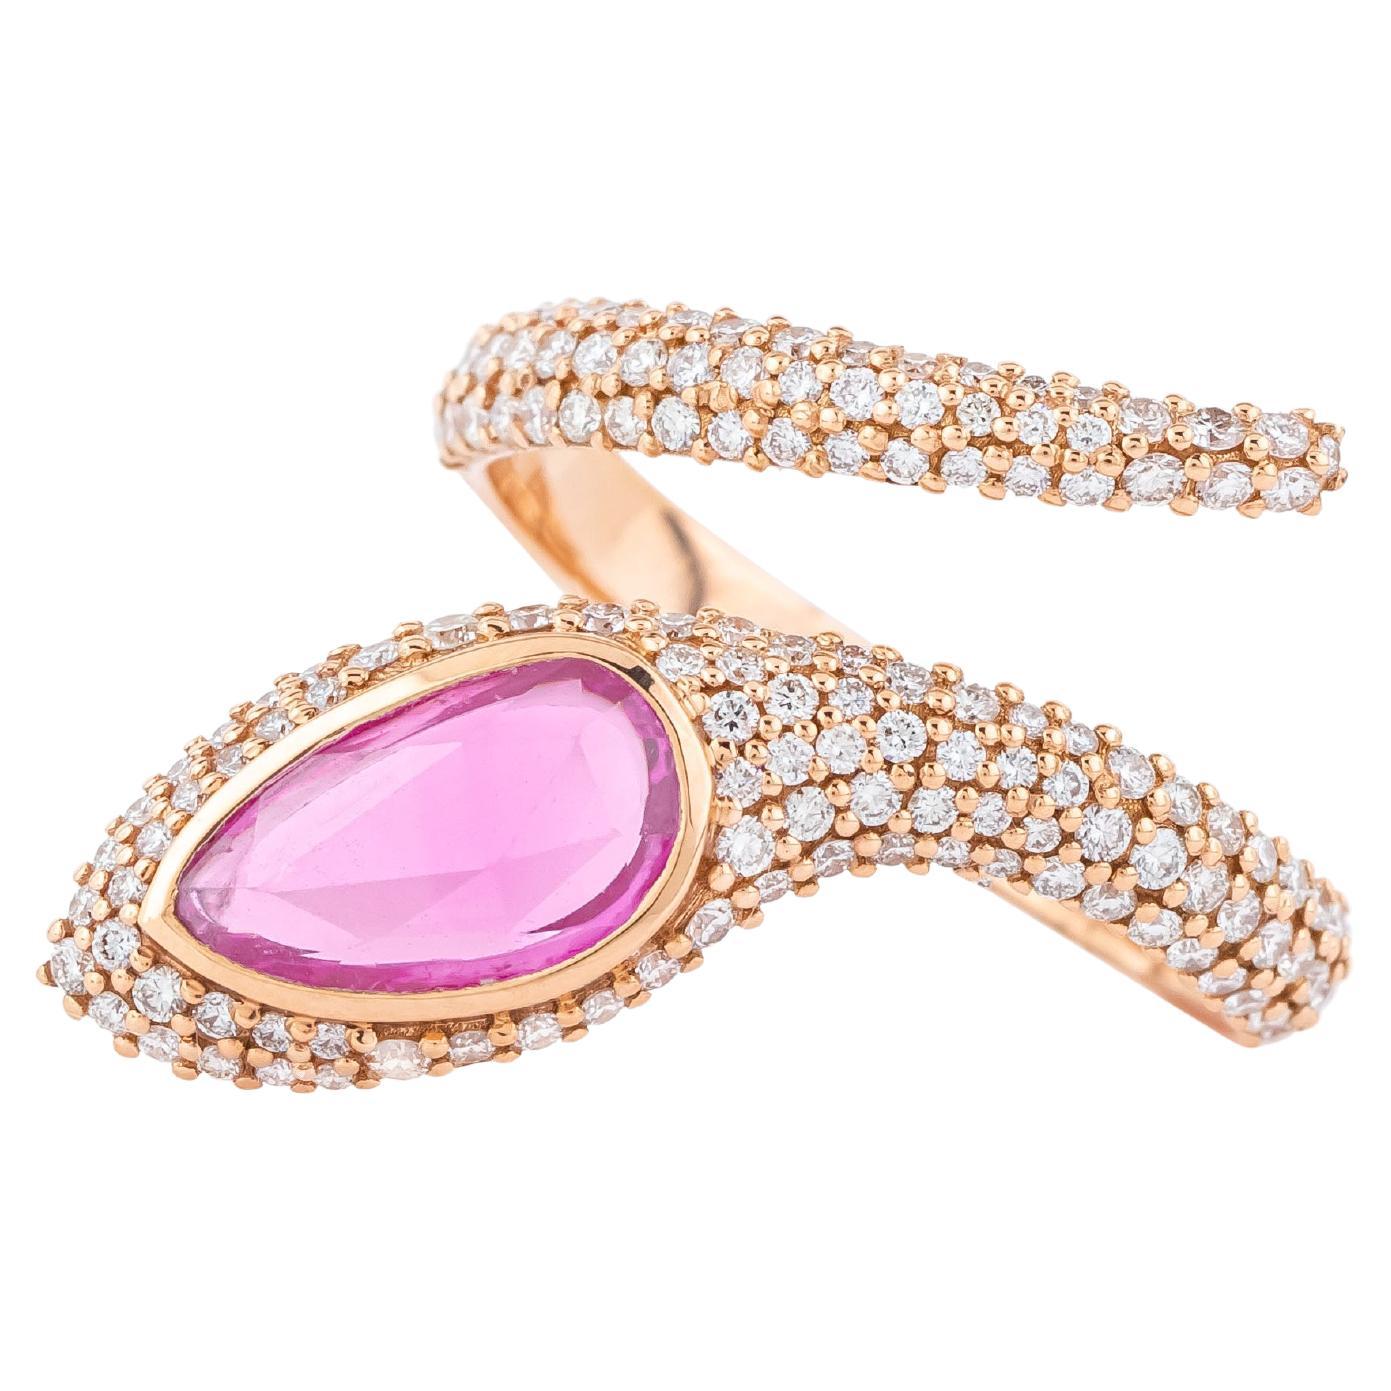 18 Karat Gold 1.94 Carat Diamond and Pink Sapphire Cocktail Ring